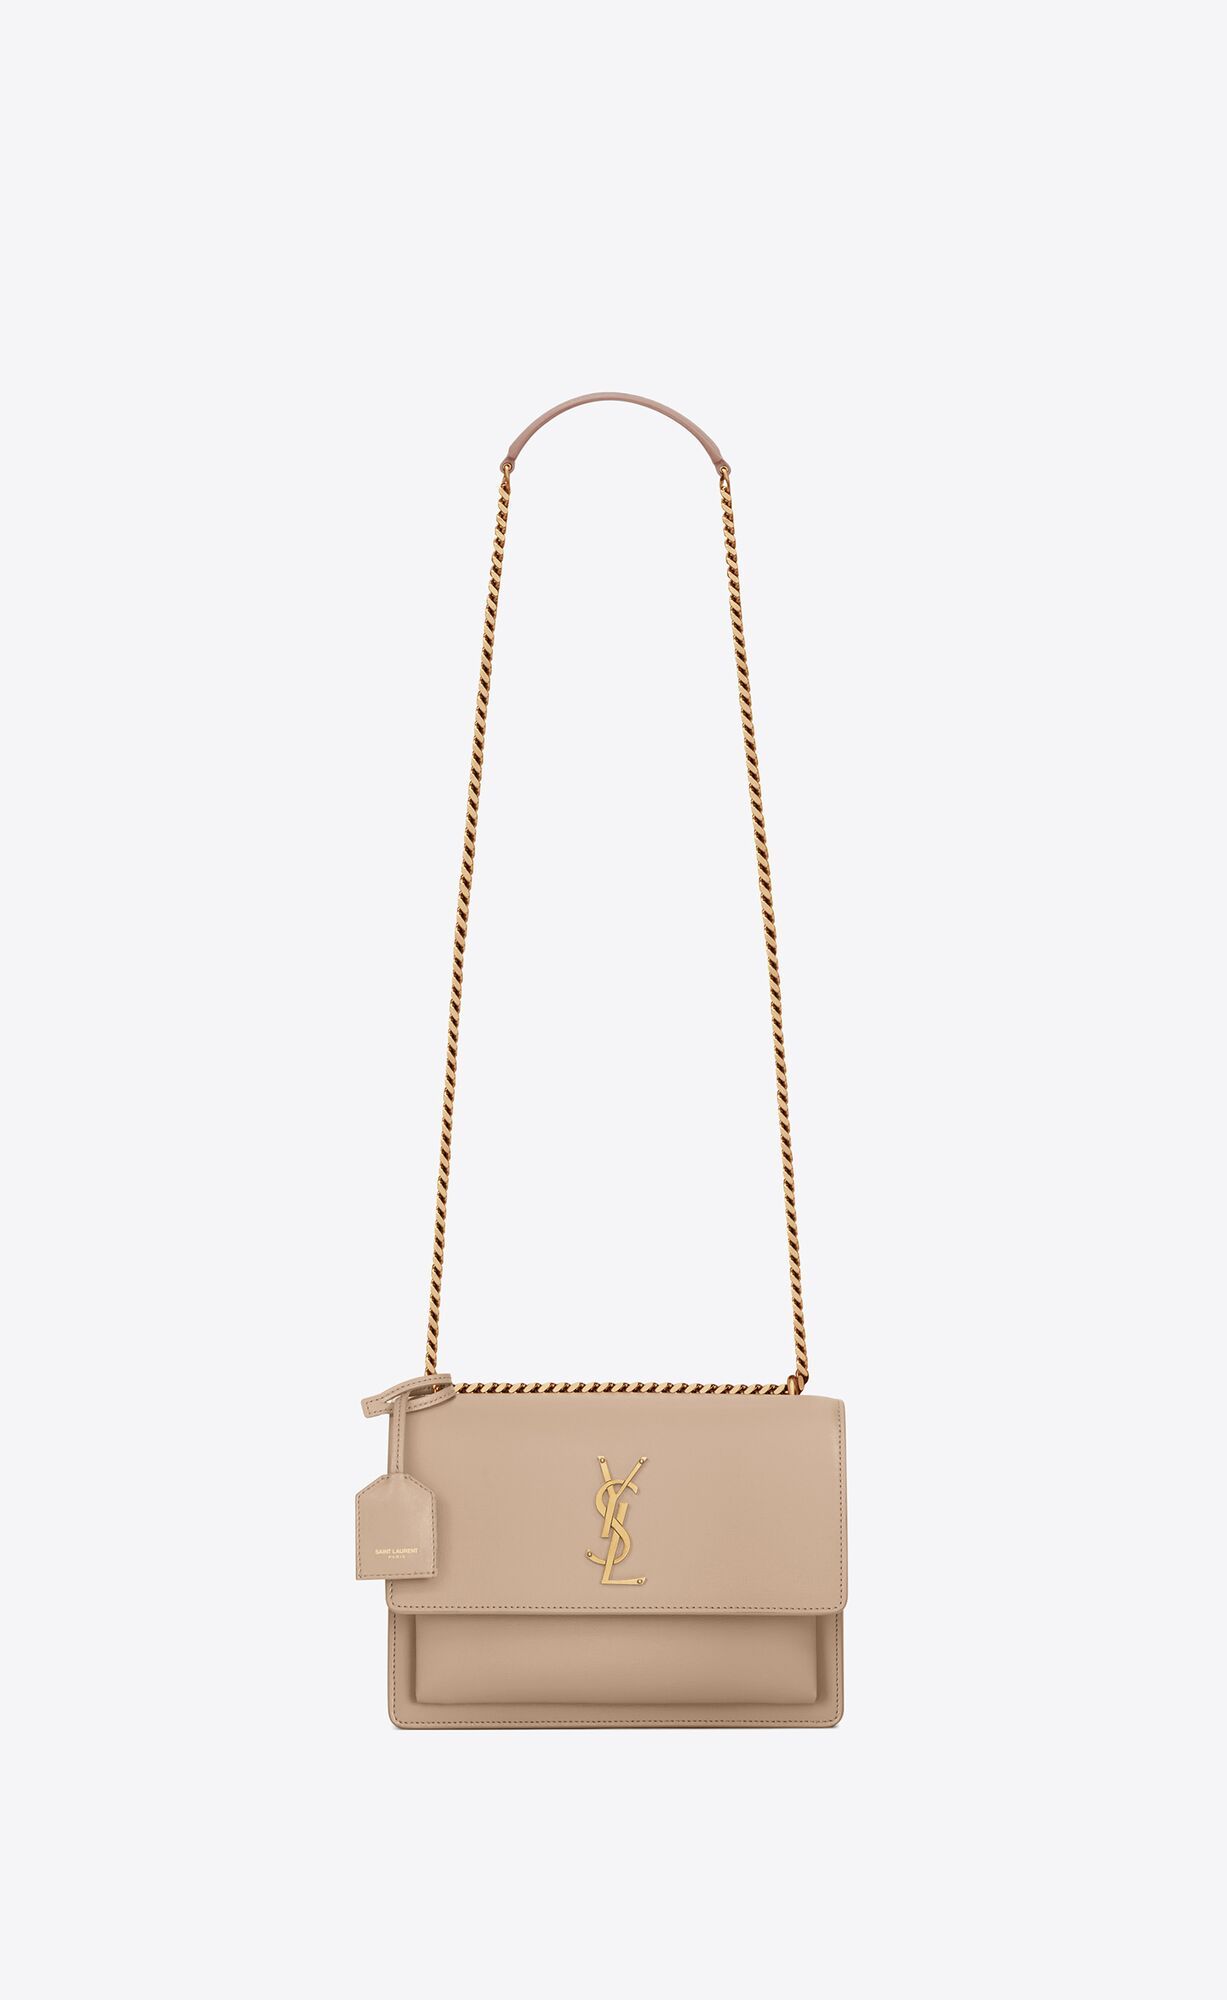 Saint Laurent monogram bag with front flap, featuring side gussets, chain and leather shoulder st... | Saint Laurent Inc. (Global)